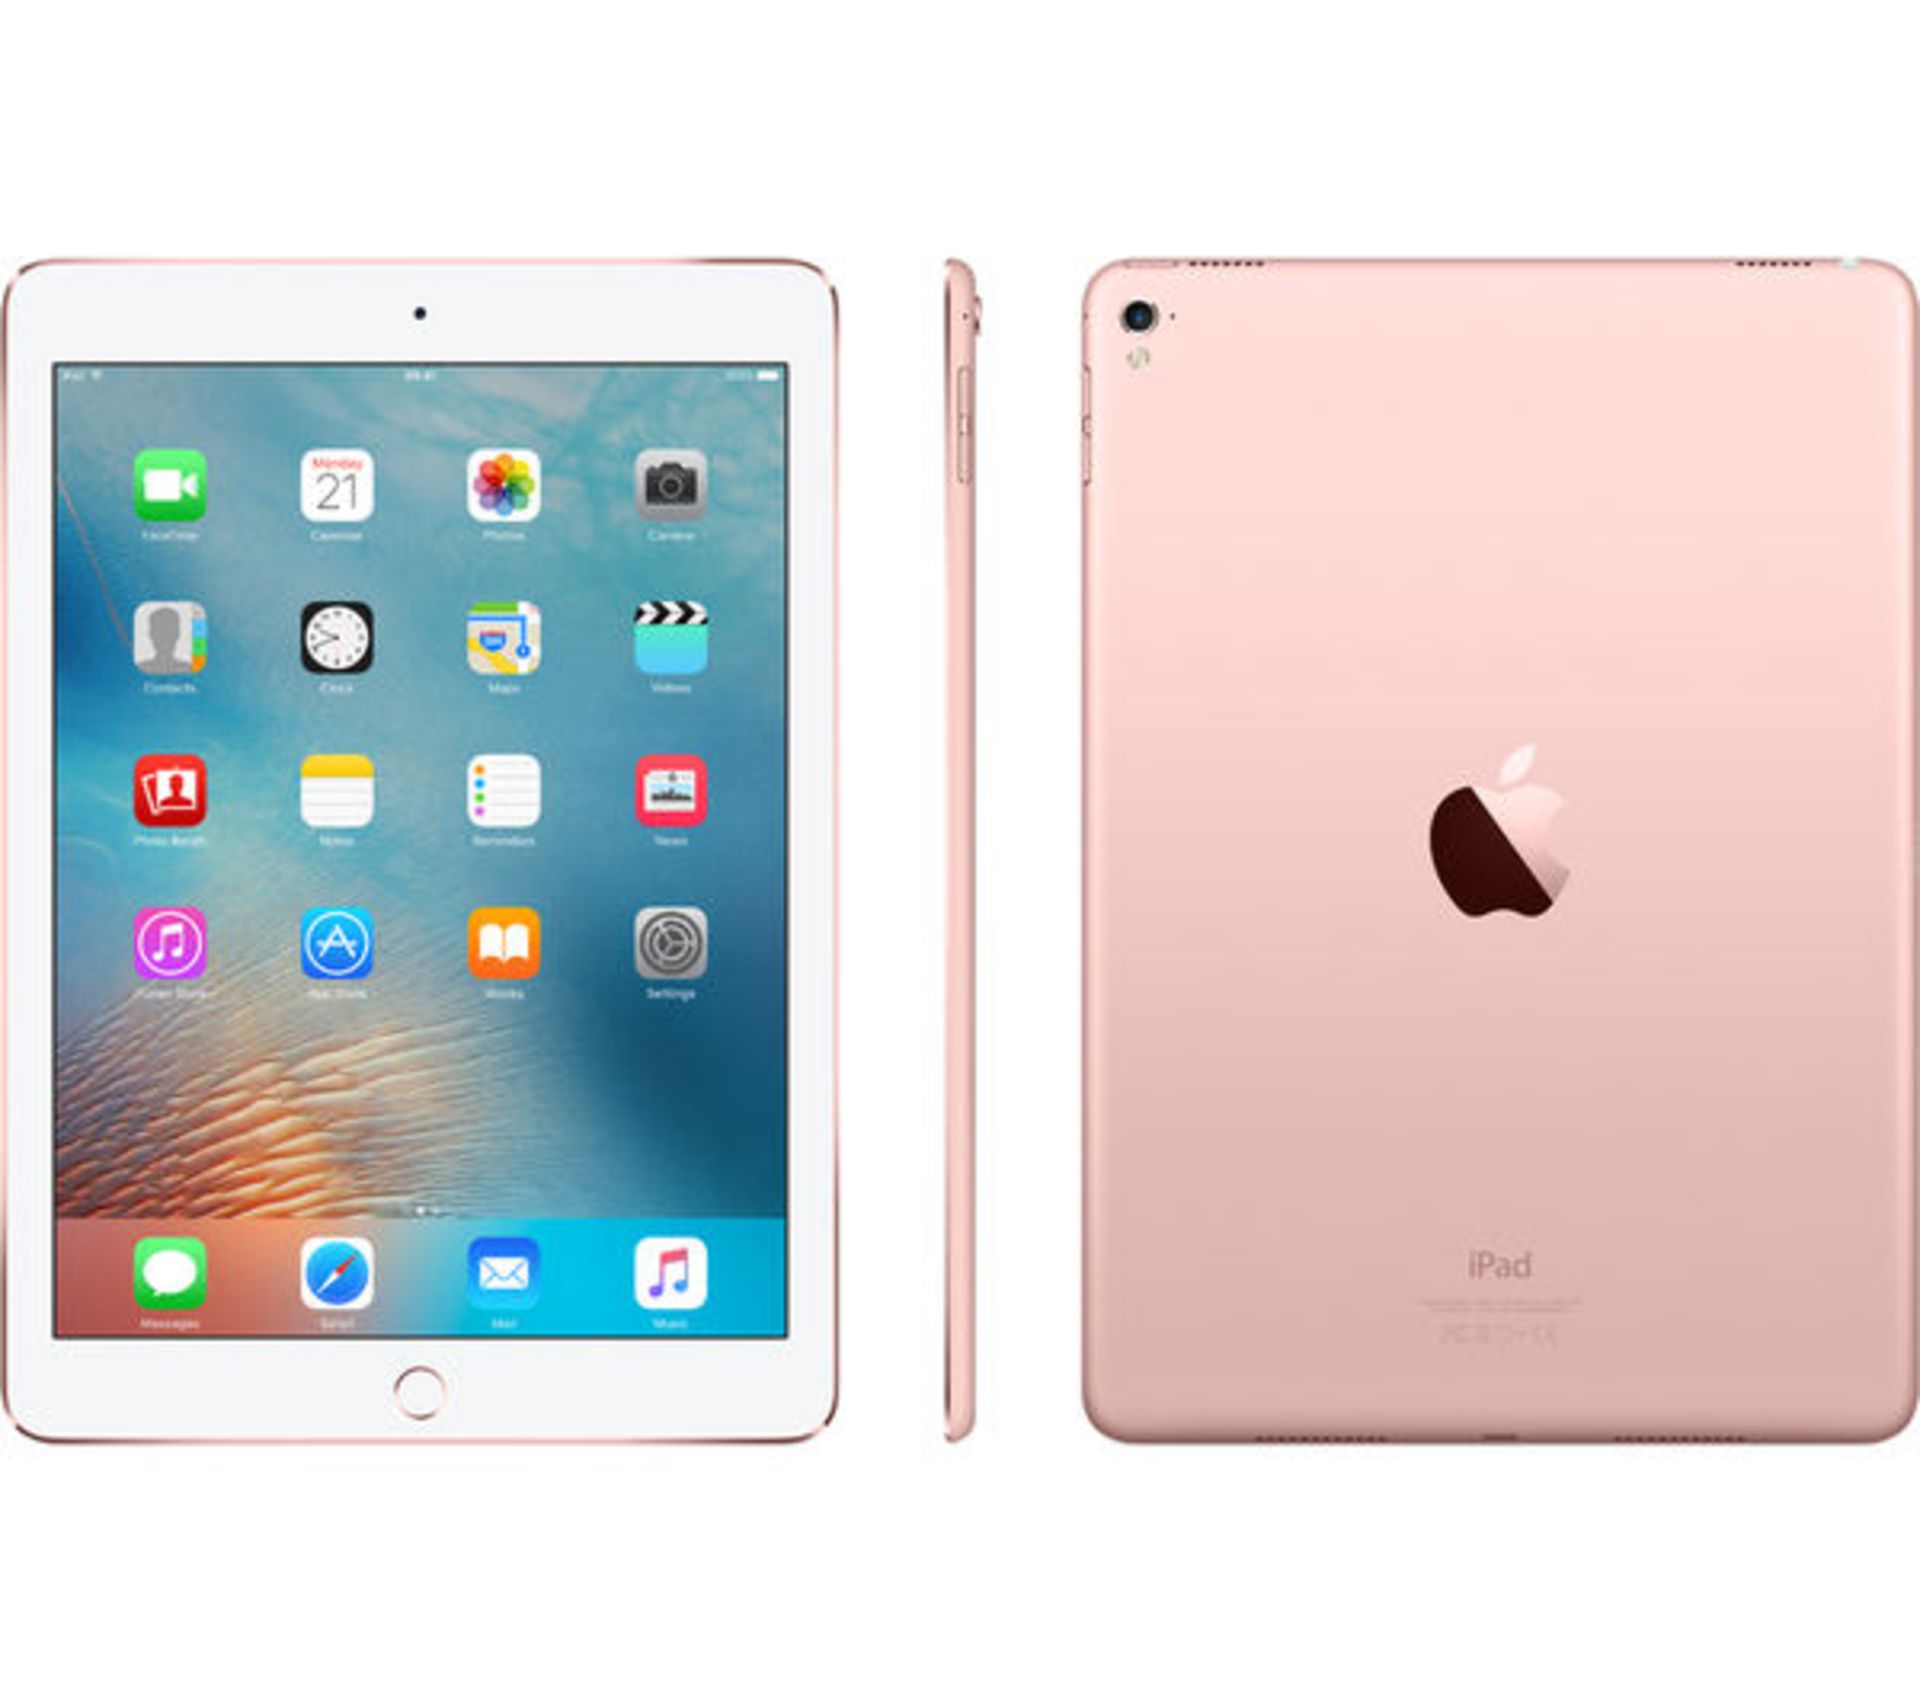 V Grade B Apple iPad Pro 9.7" 32GB Rose Gold - Wi-Fi - In Apple Box With Apple Accessories - Ex Demo